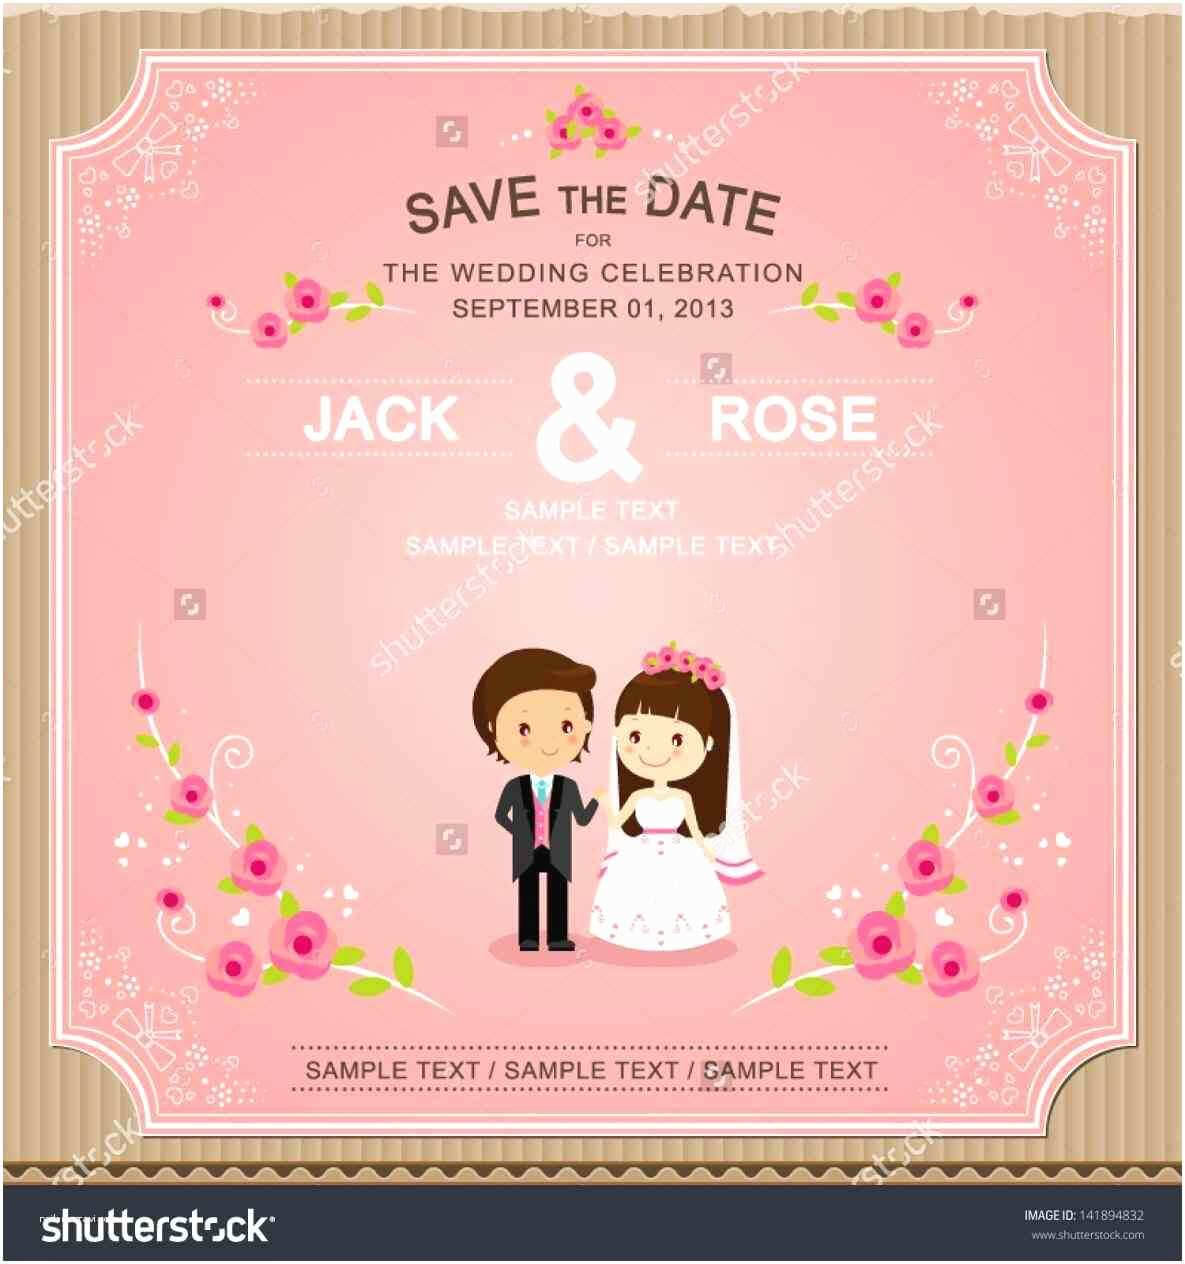 Online Editable Wedding Invitation Cards Free Download Intended For Free E Wedding Invitation Card Templates